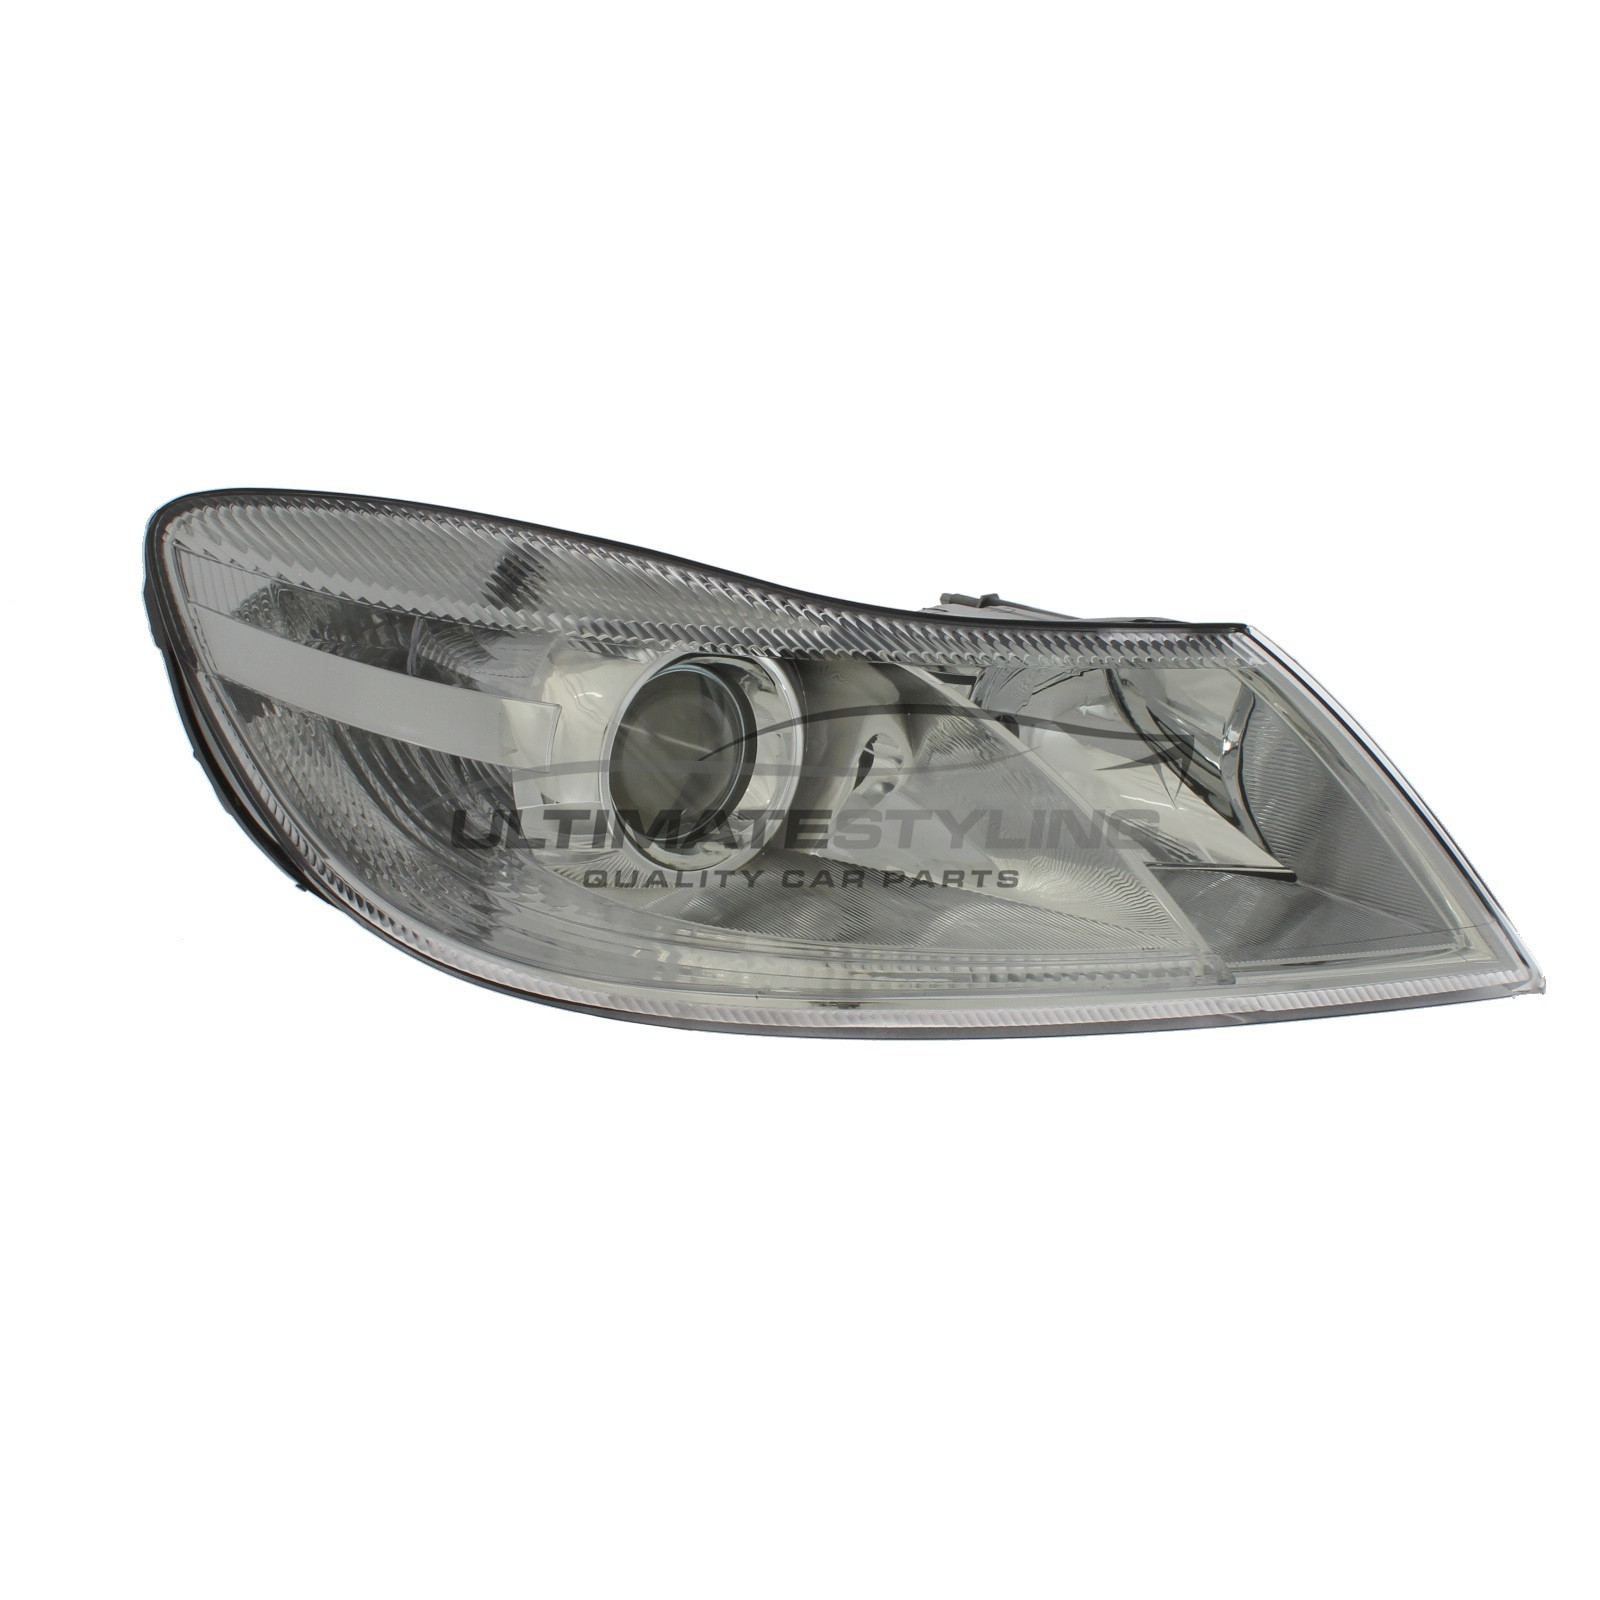 Headlight / Headlamp for Skoda Octavia